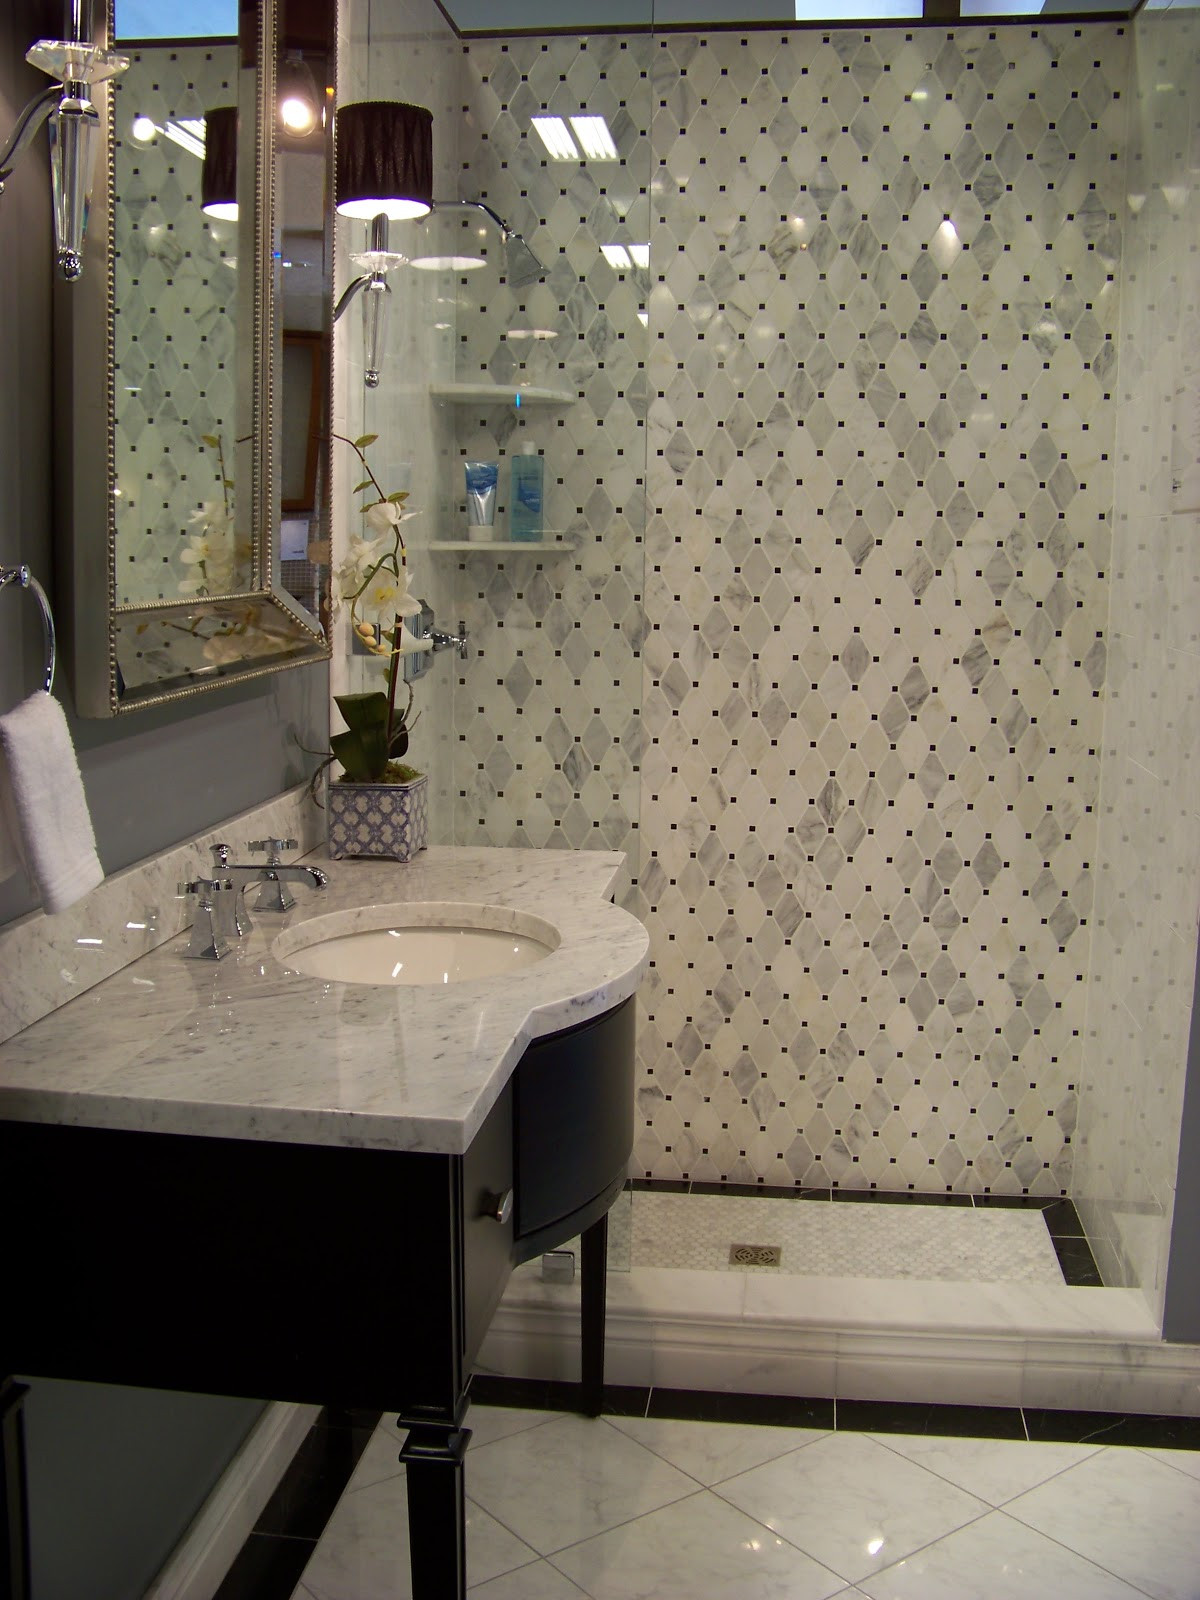 Ceramic Tiles For Bathroom
 Home Decor Bud ista Bathroom Inspiration The Tile Shop